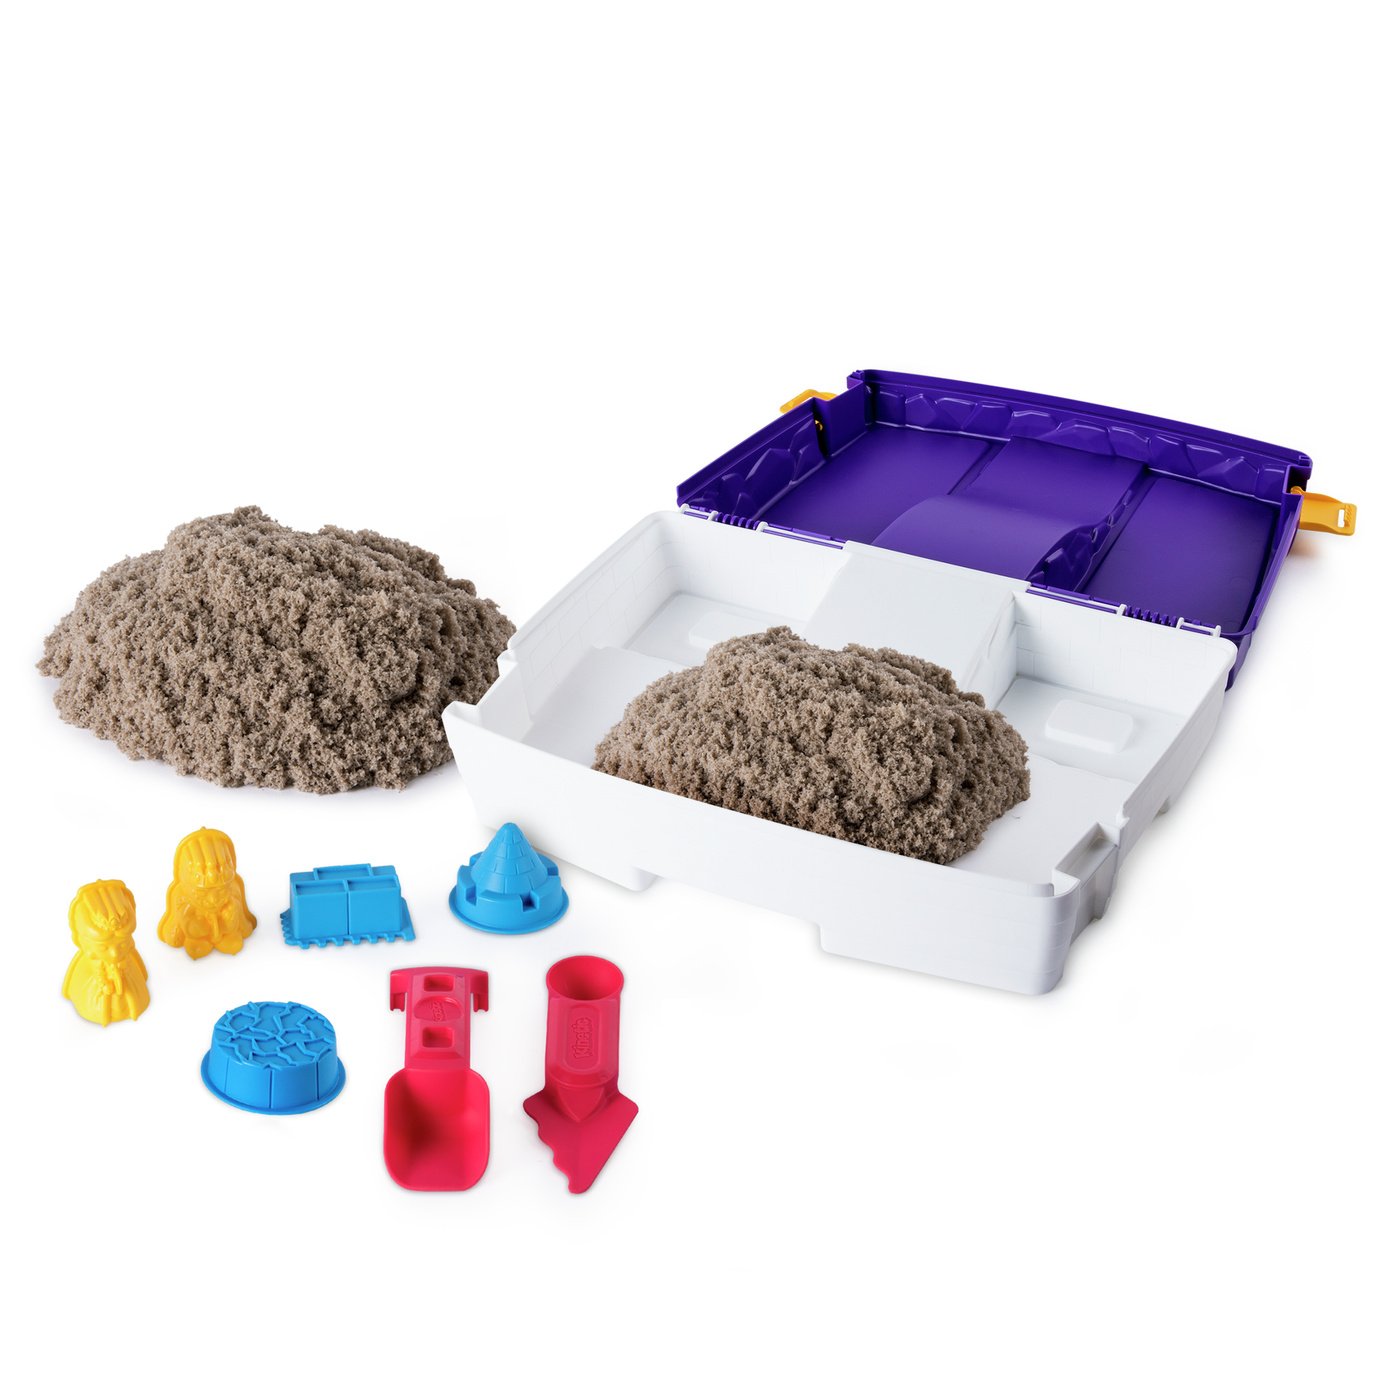 Kinetic Sand Folding Sand Box Review